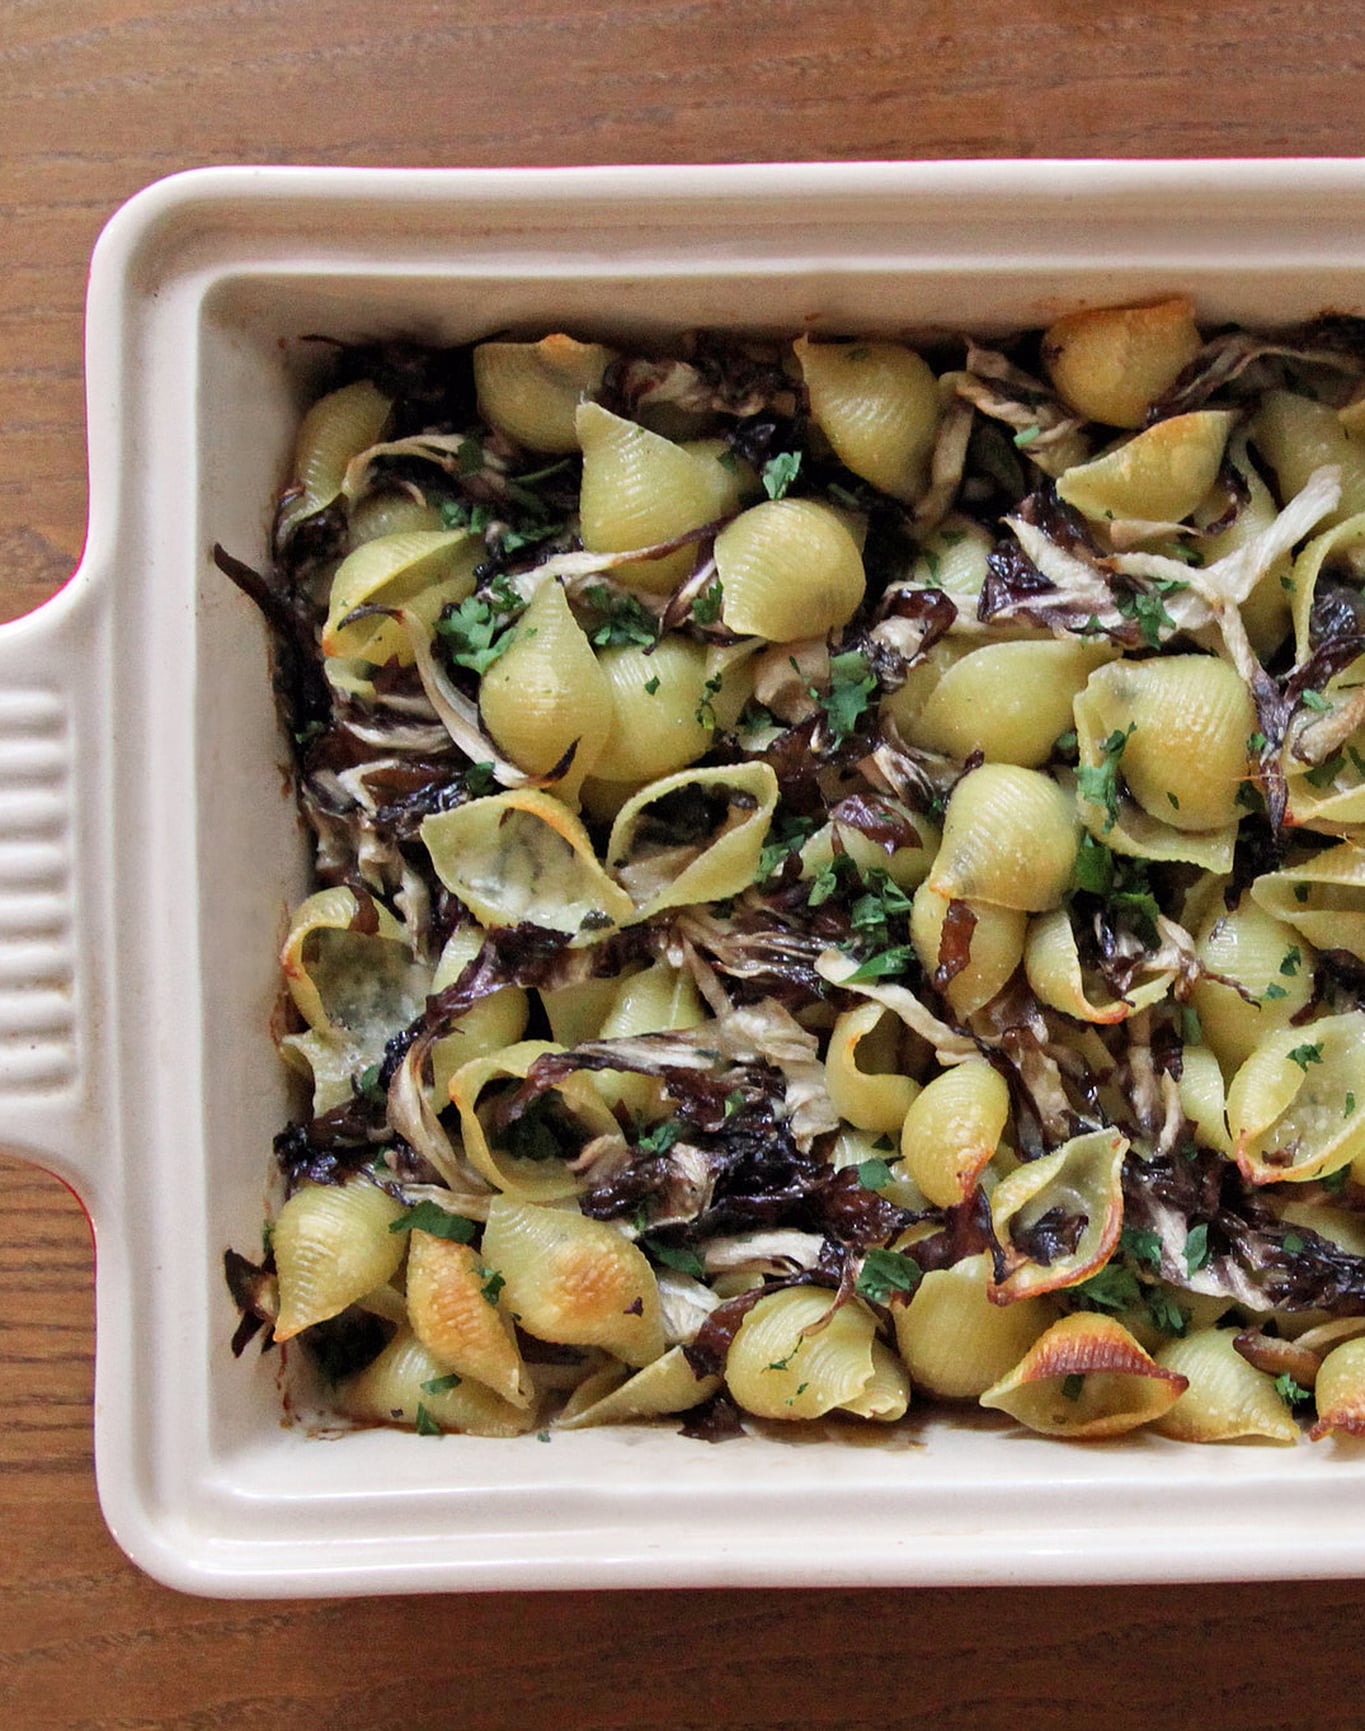 Creamy Gorgonzola Pasta With Mushrooms Recipe on Food52